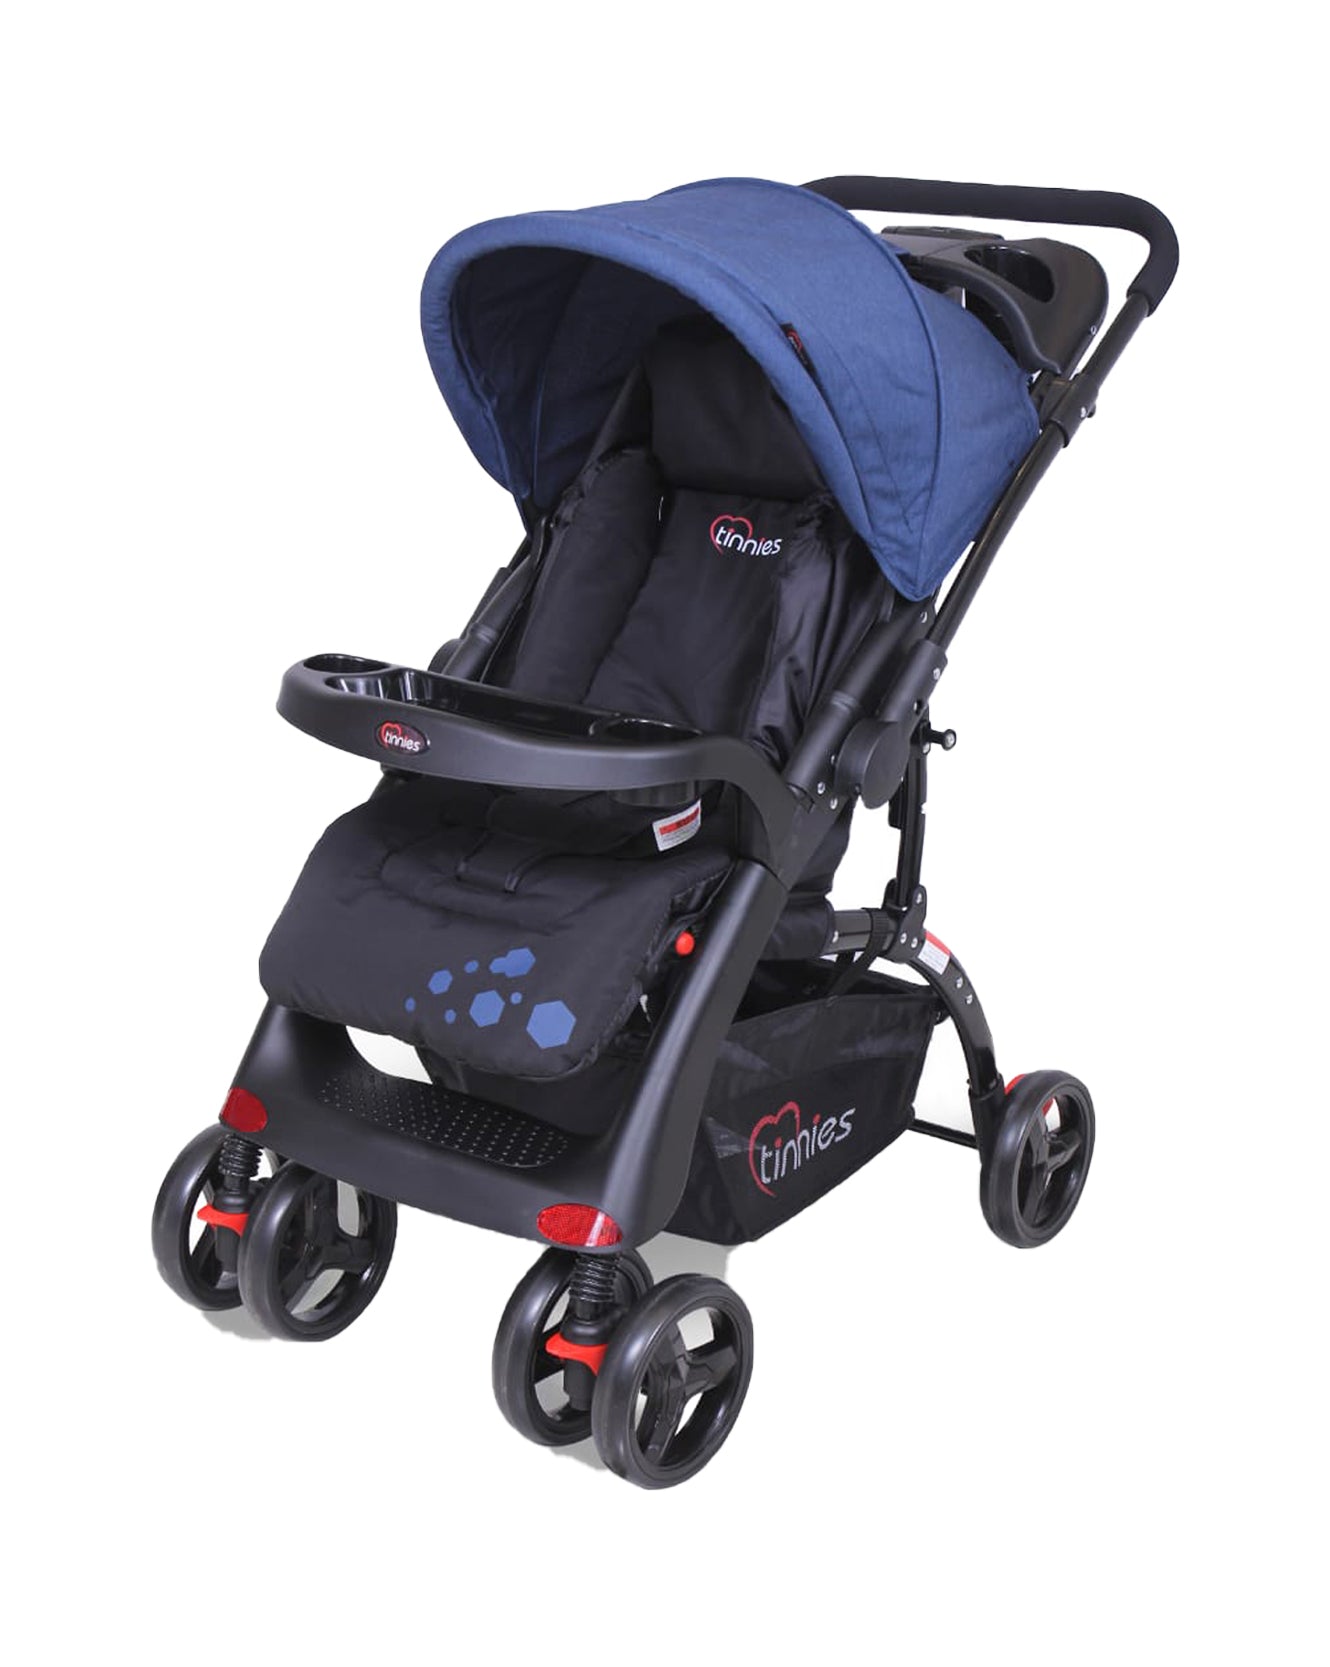 Tinnies Baby Stroller Reversible Handle (Multi Color)